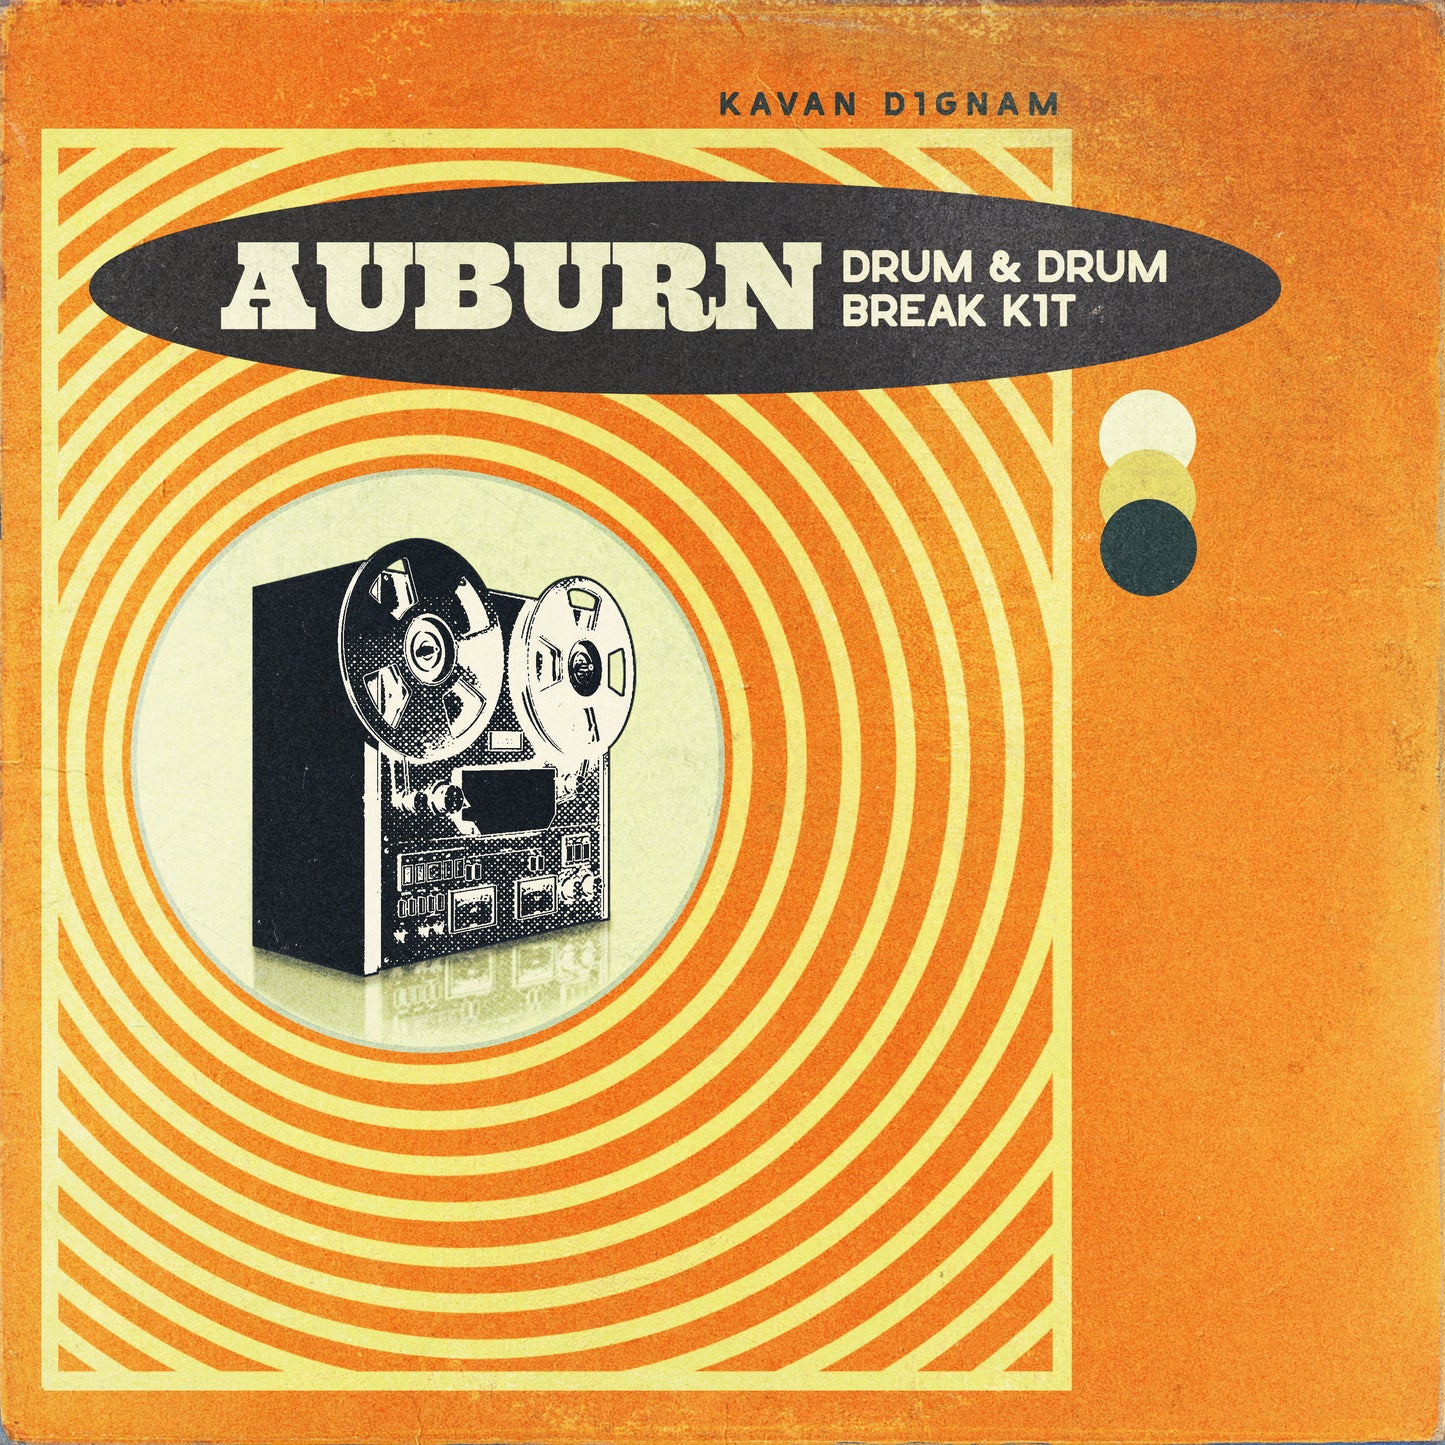 'AUBURN' Kavan Dignam Drum & Drum Break Kit